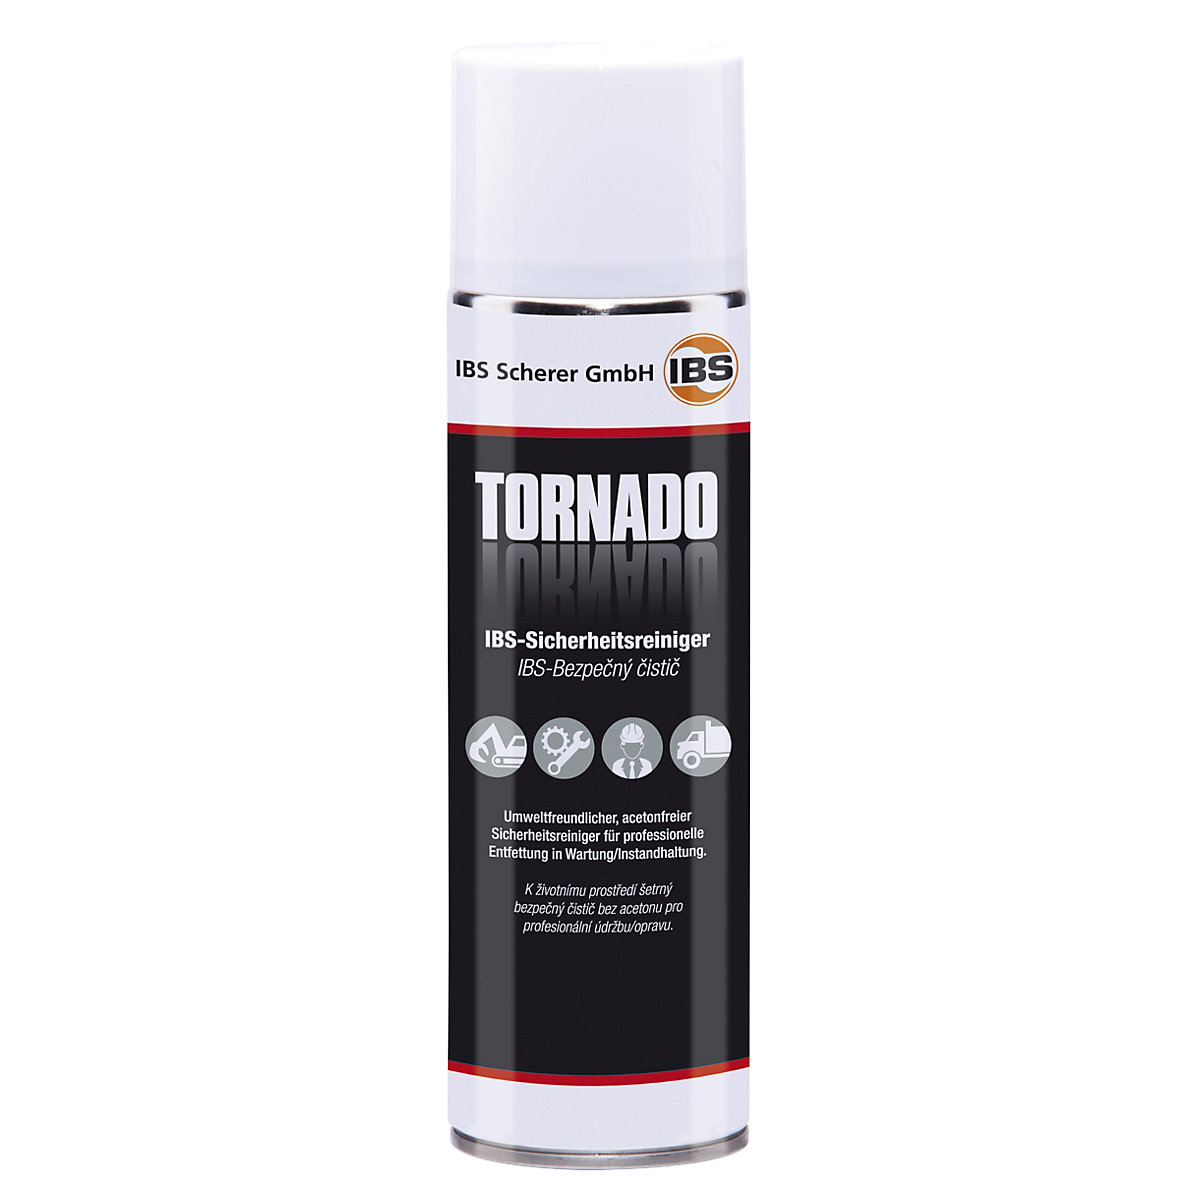 Detergente de segurança TORNADO – IBS Scherer